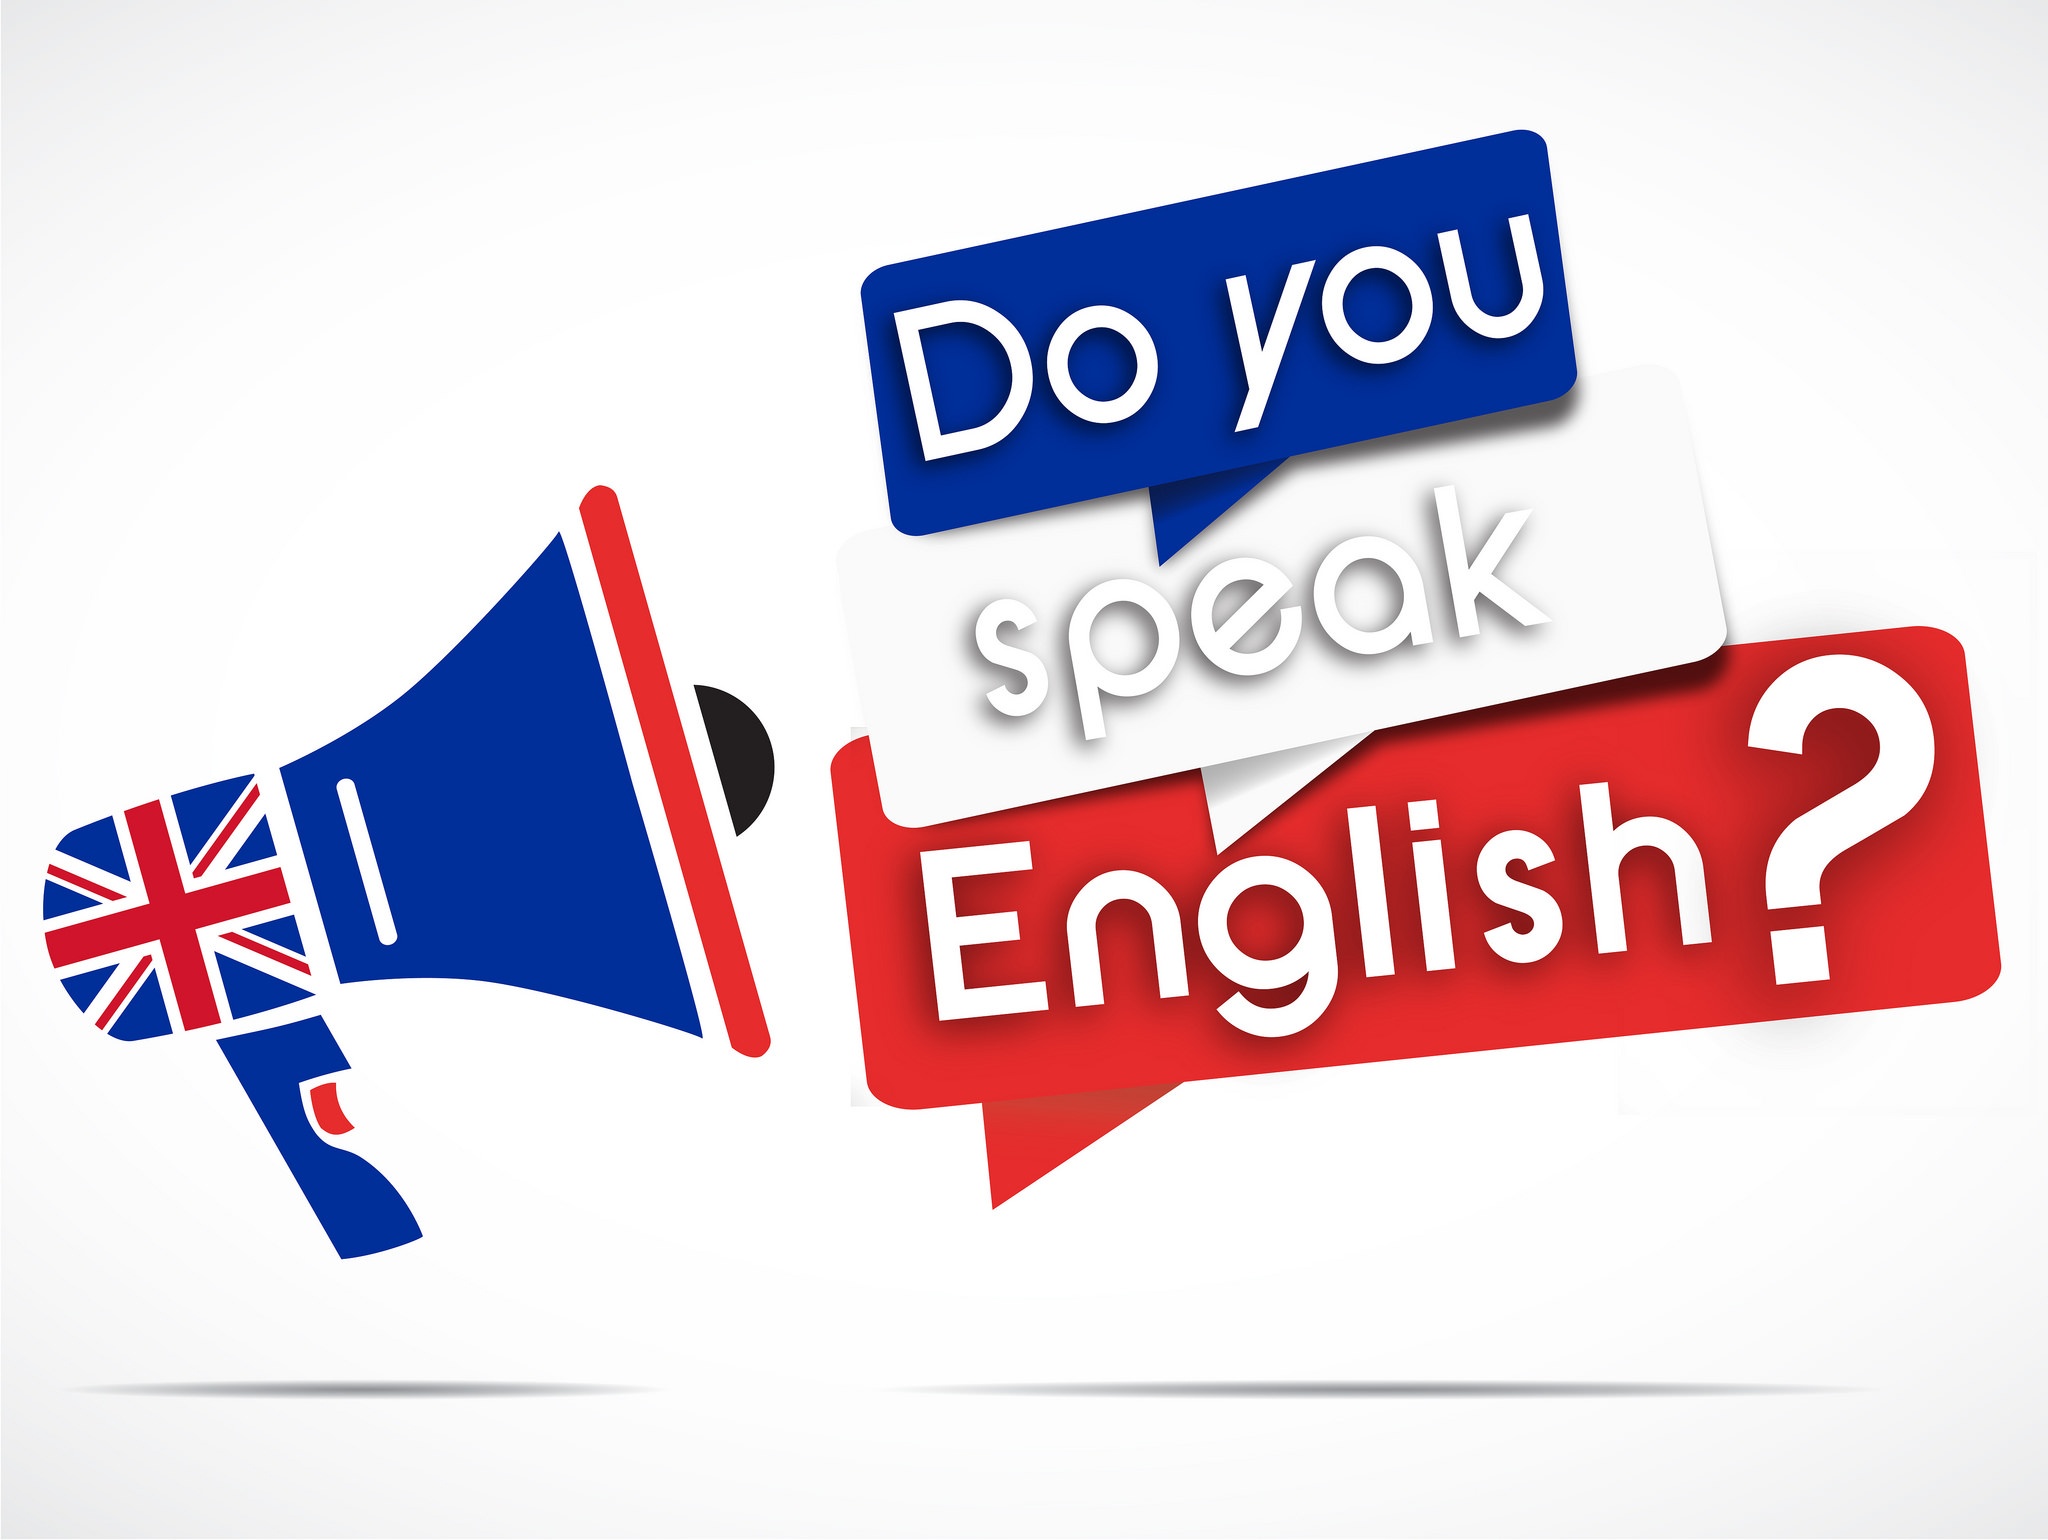 English spoken here. Speak English картинка. Do you speak English. Speak English надпись. Английский язык do you speak.